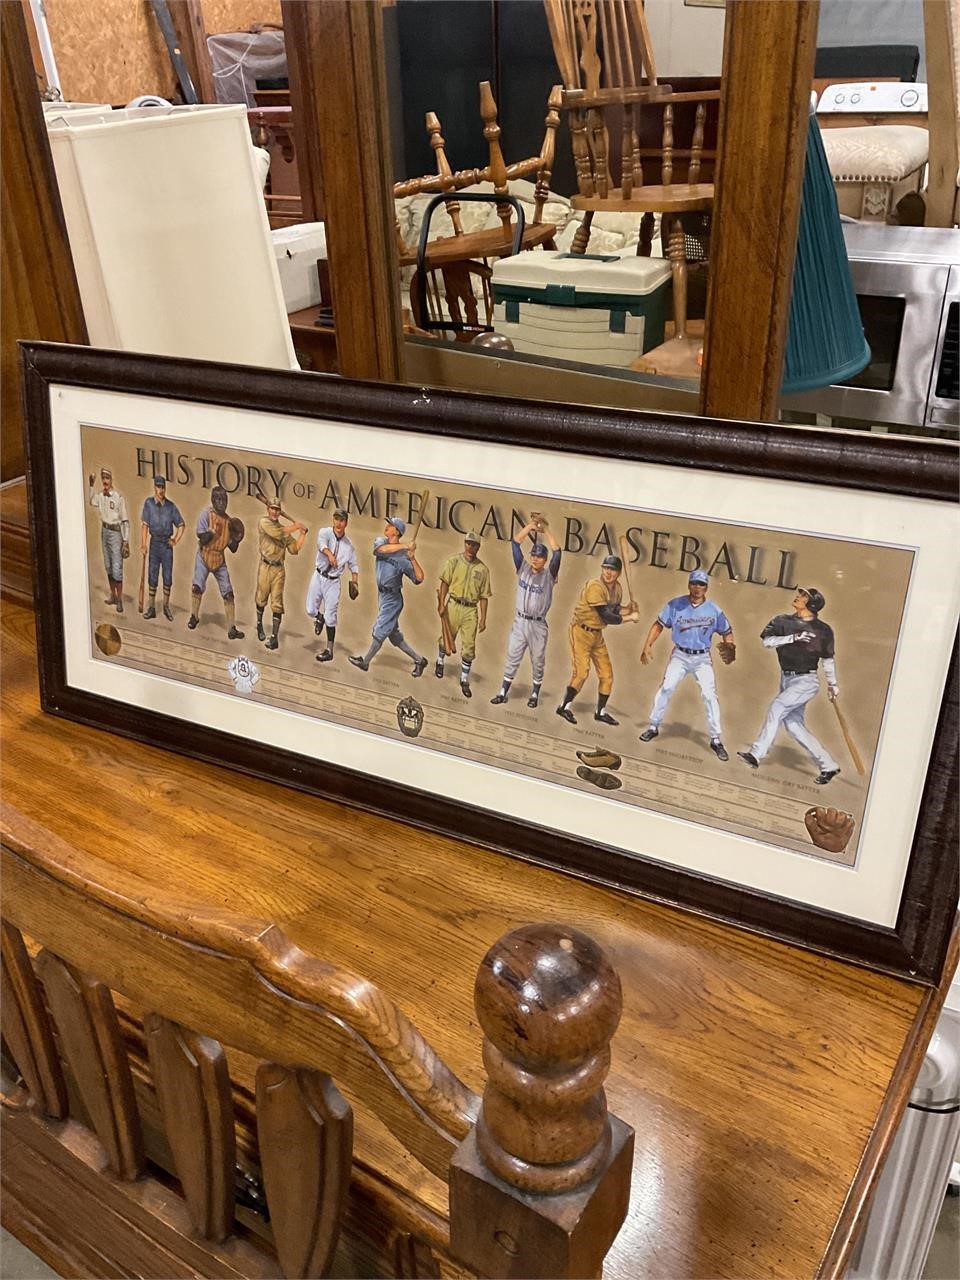 Baseball poster